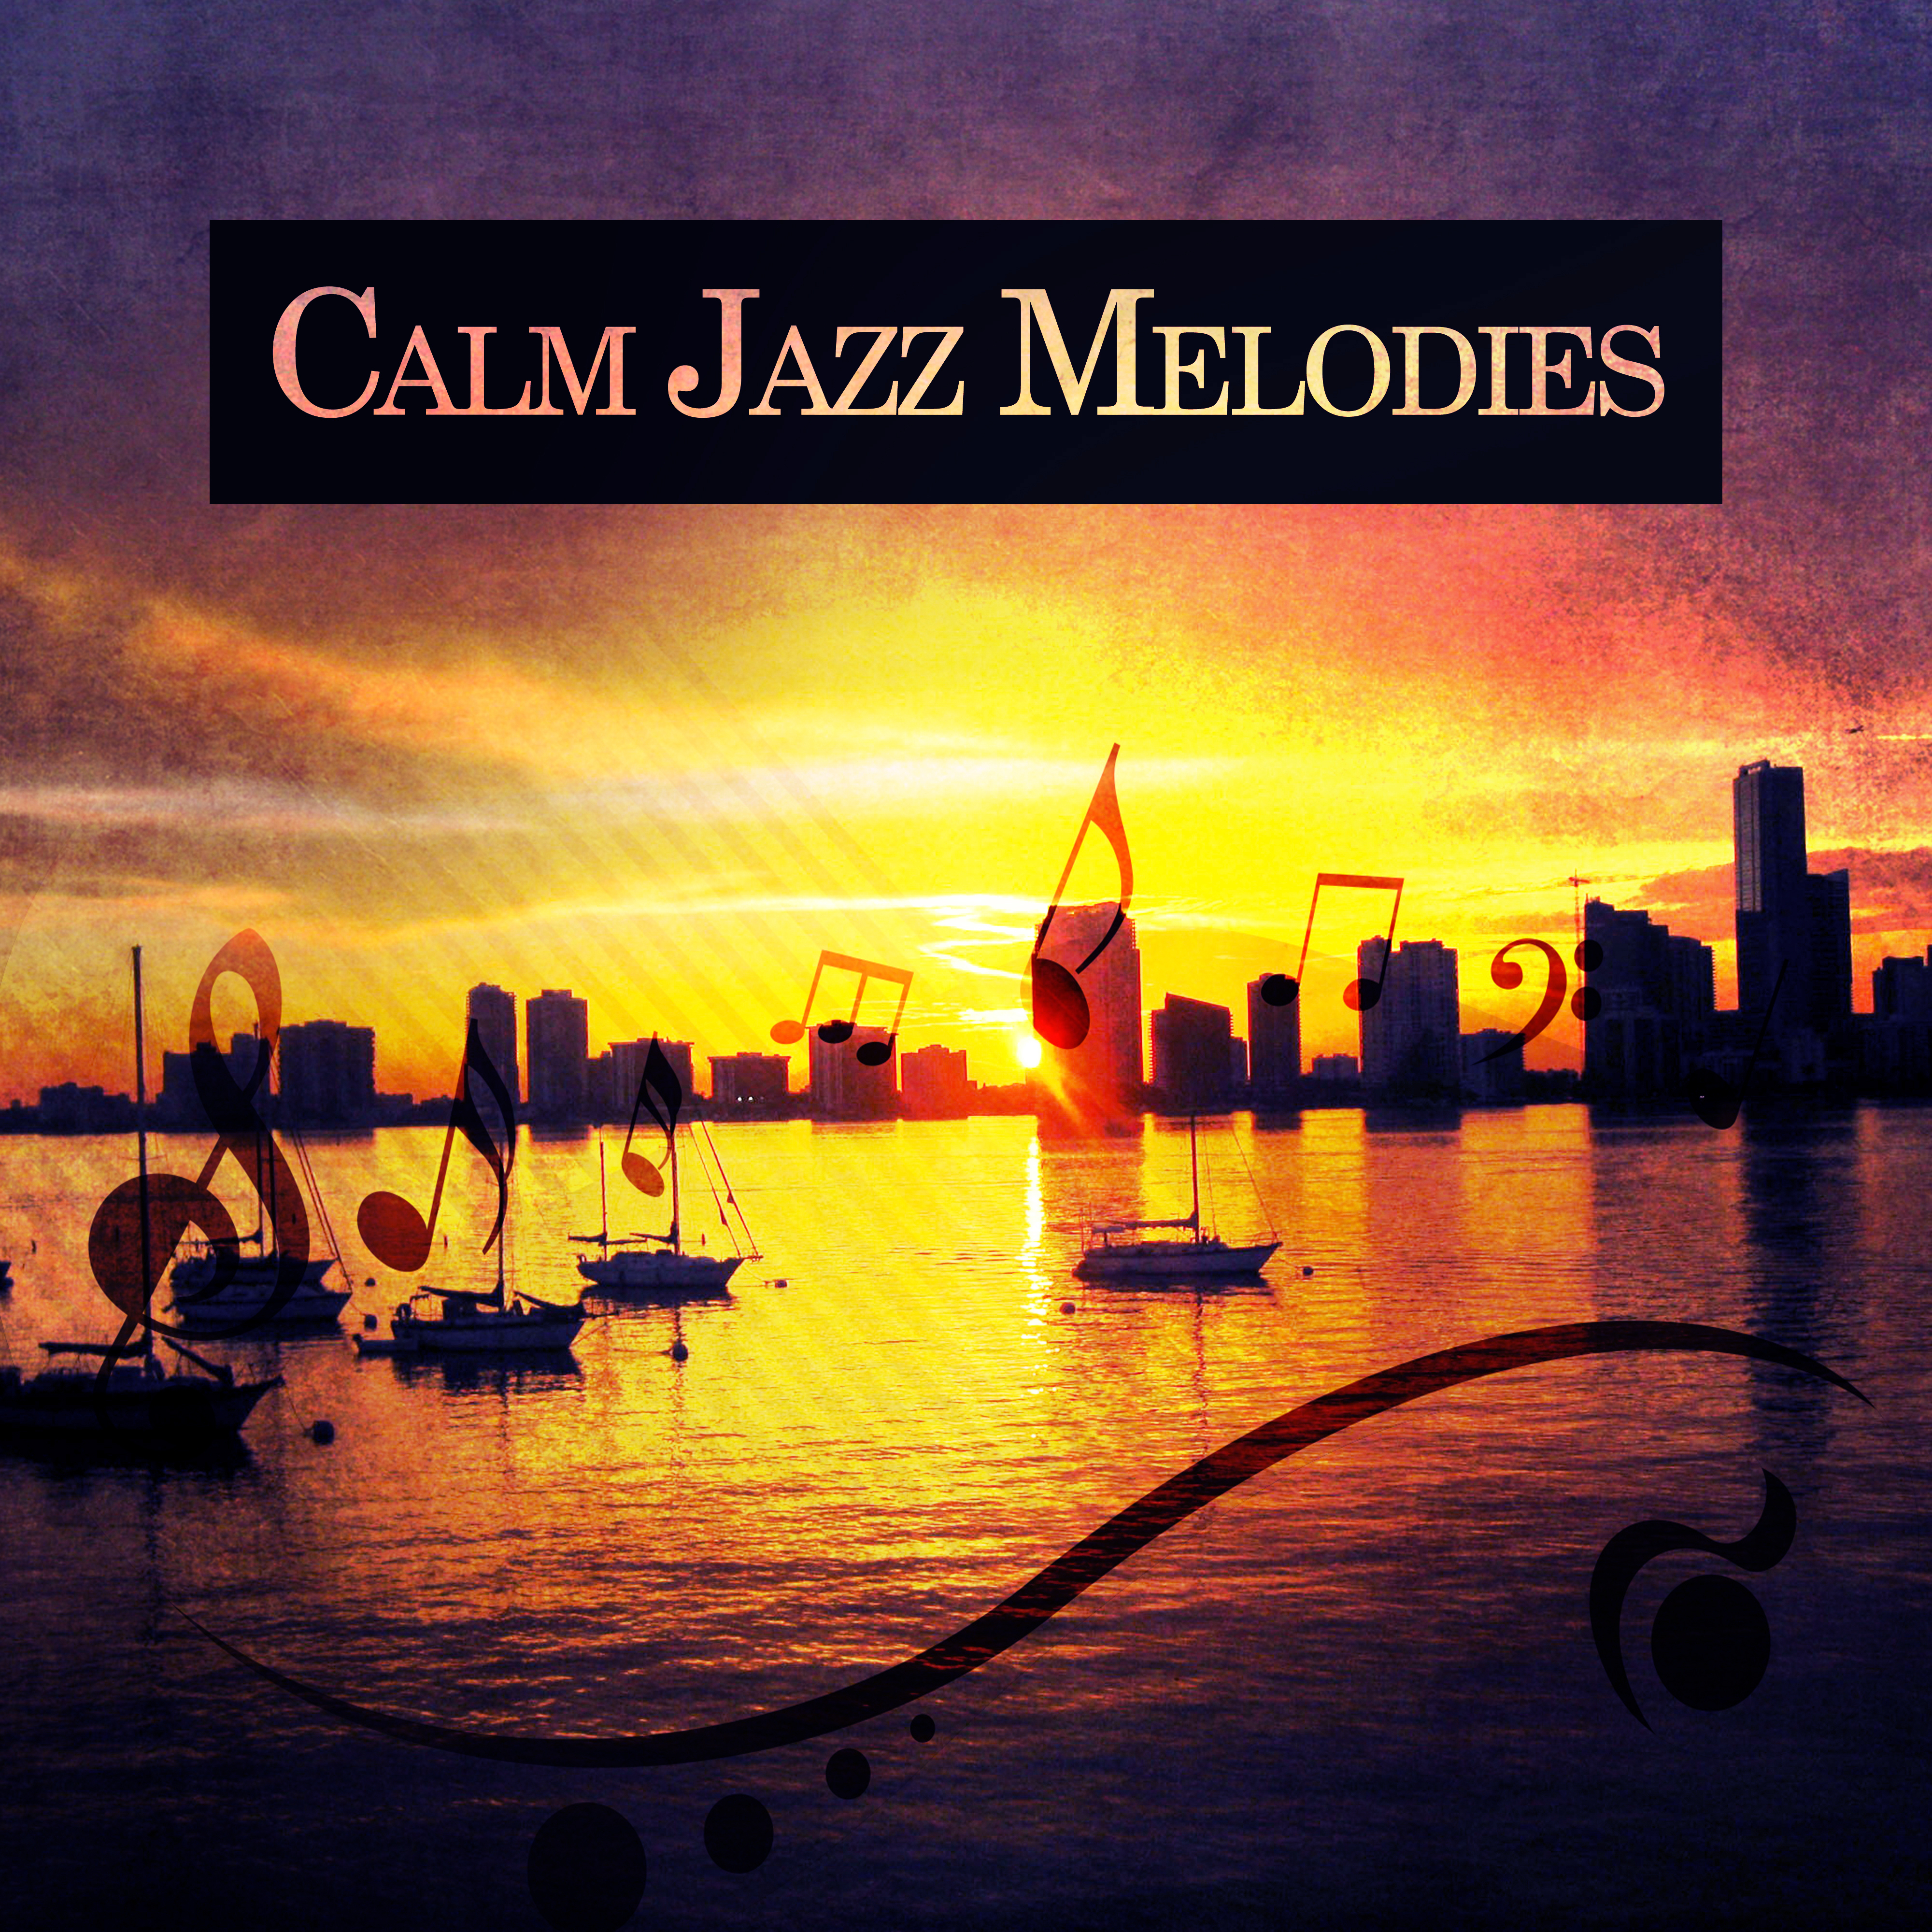 Calm Jazz Melodies  Easy Listening Jazz, Smooth Jazz, Instrumental Music,  Jazz Lounge, Simple Piano